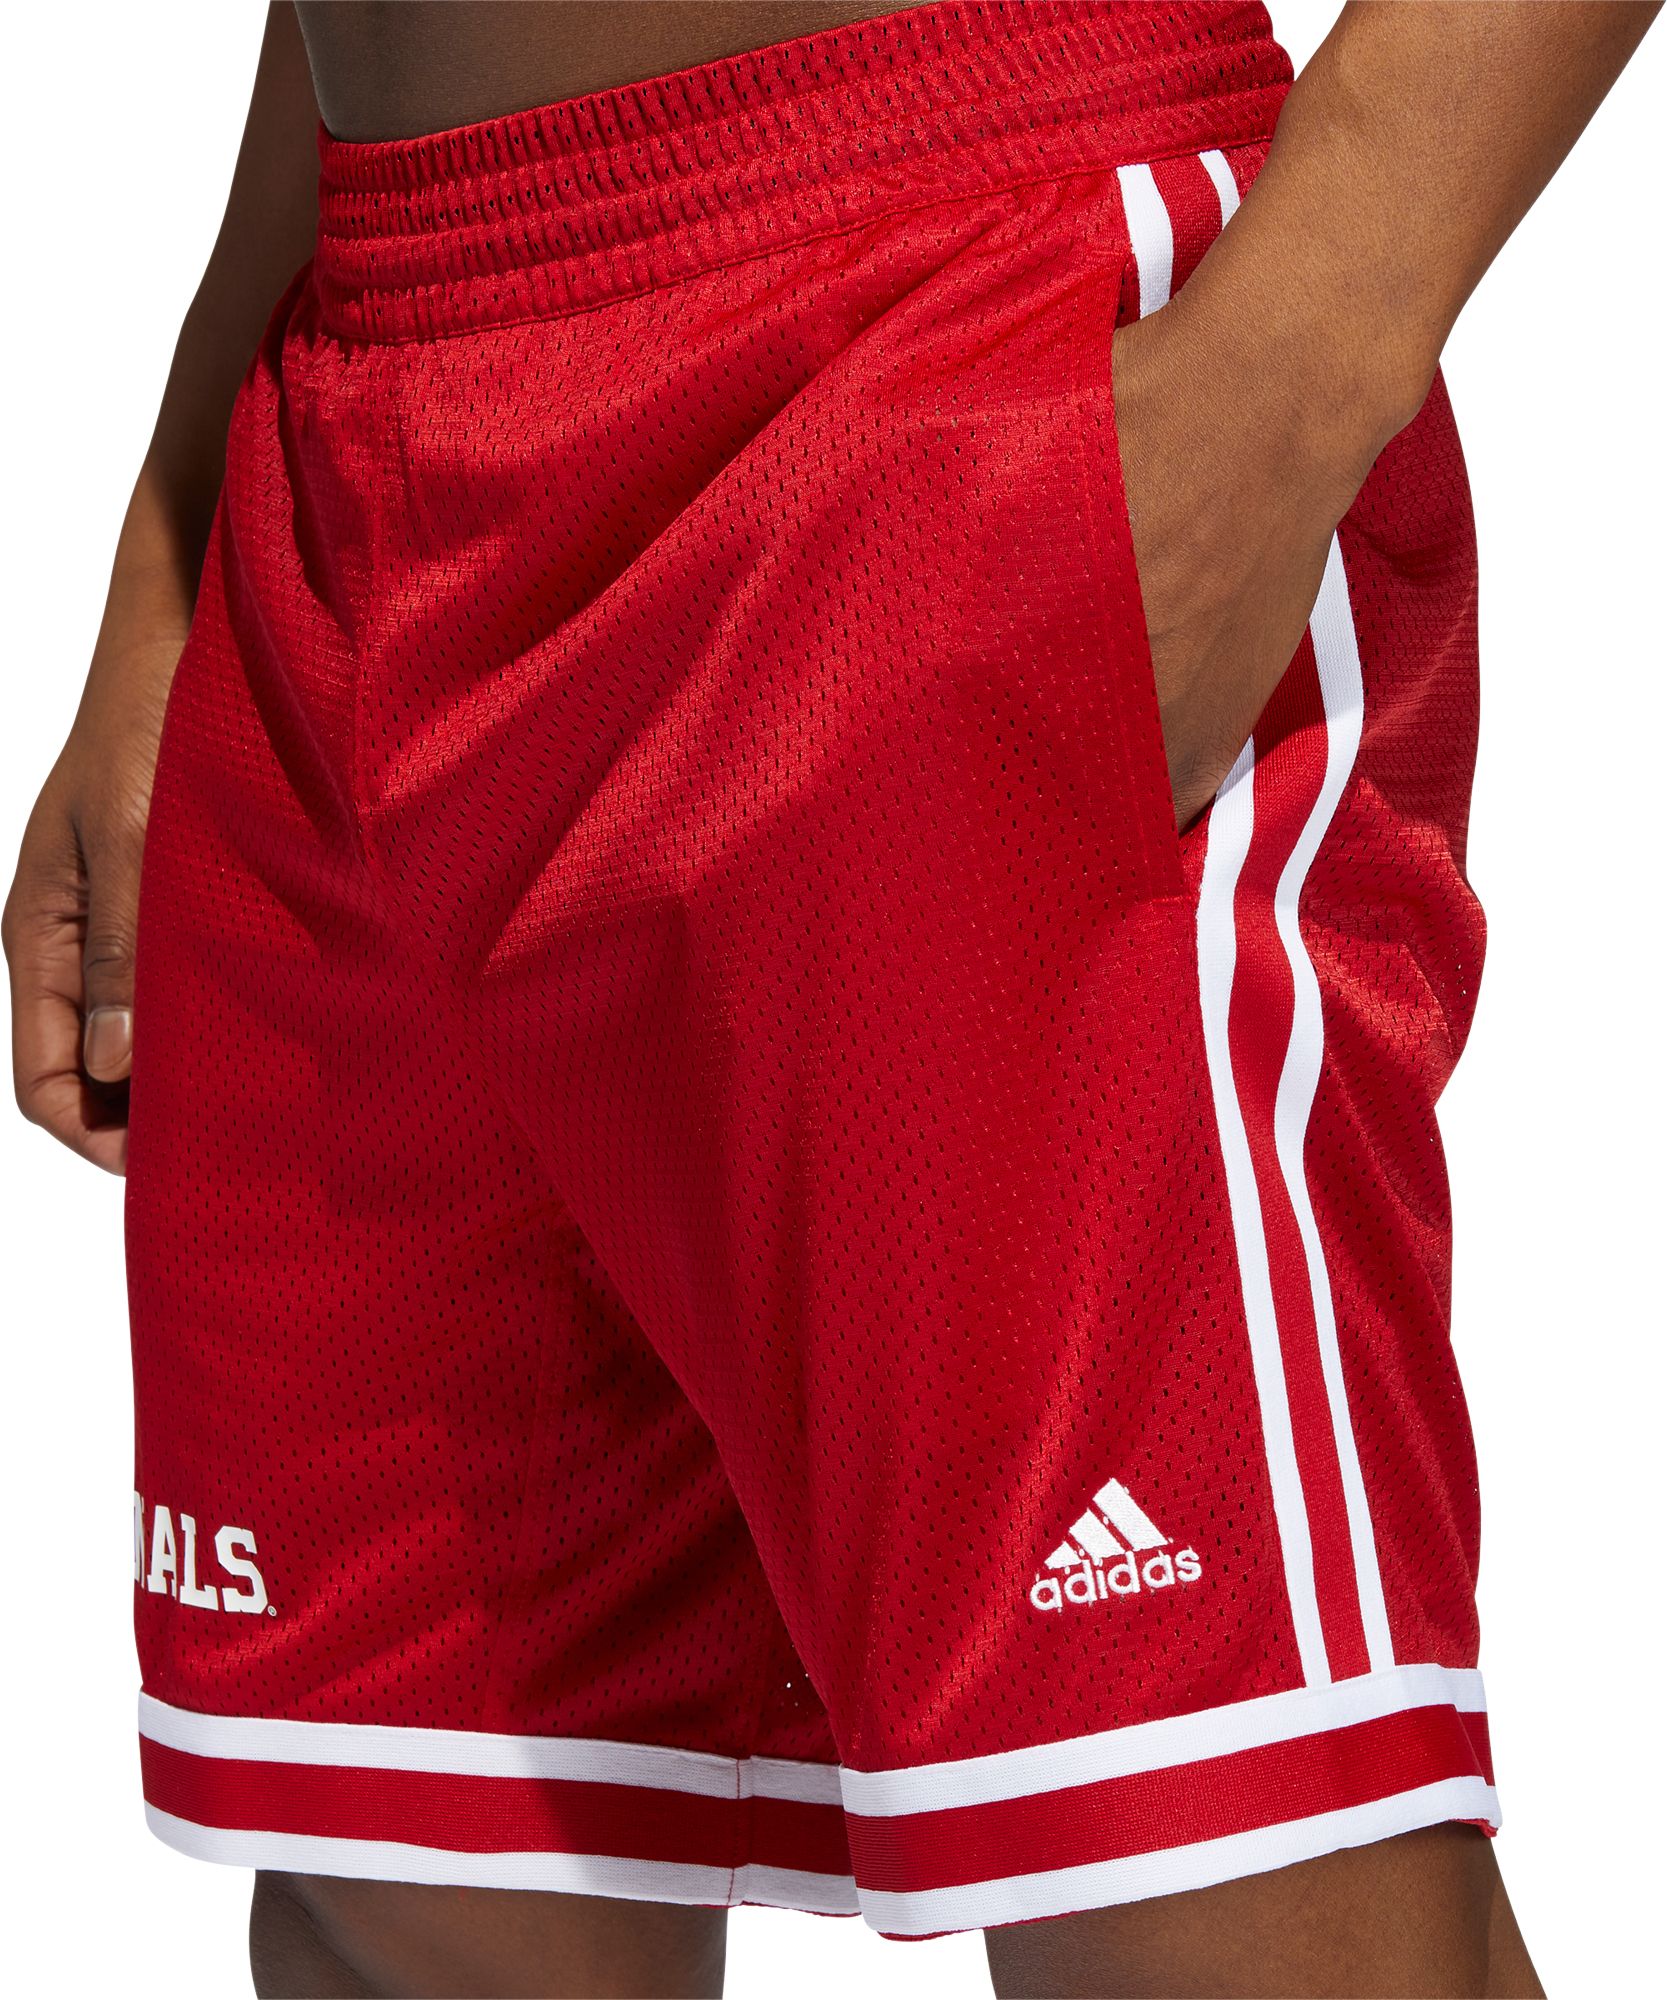 Men's adidas #23 White Louisville Cardinals Replica Football Jersey